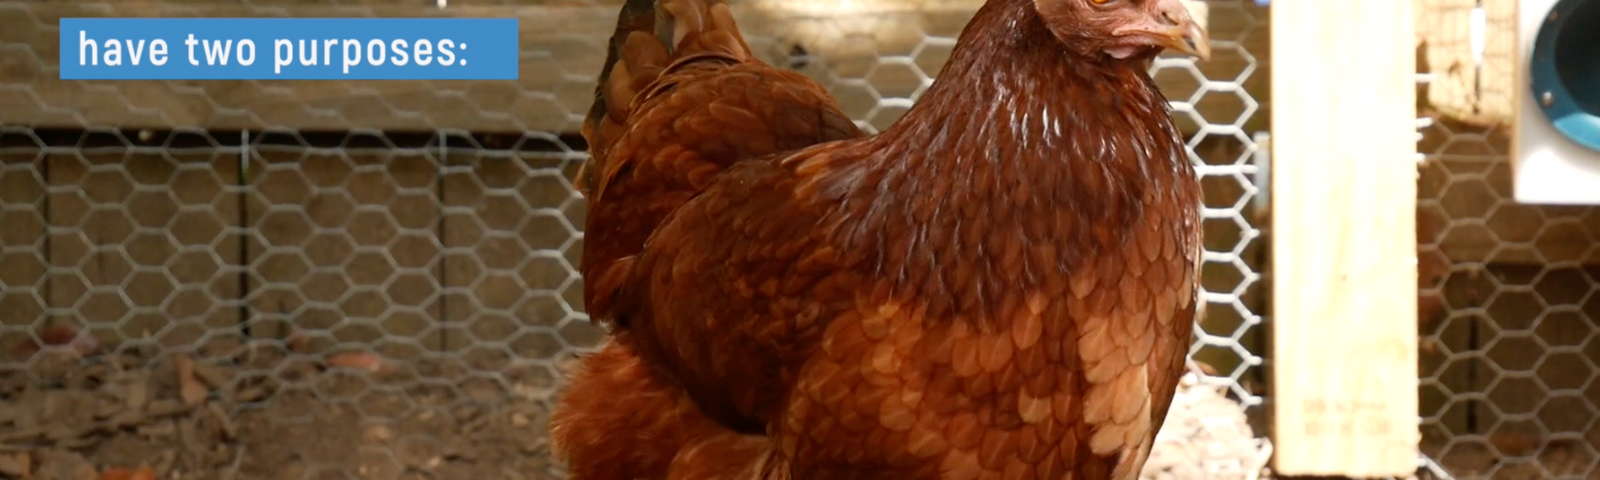 Choosing Chickens: American Heritage Chicken Breeds